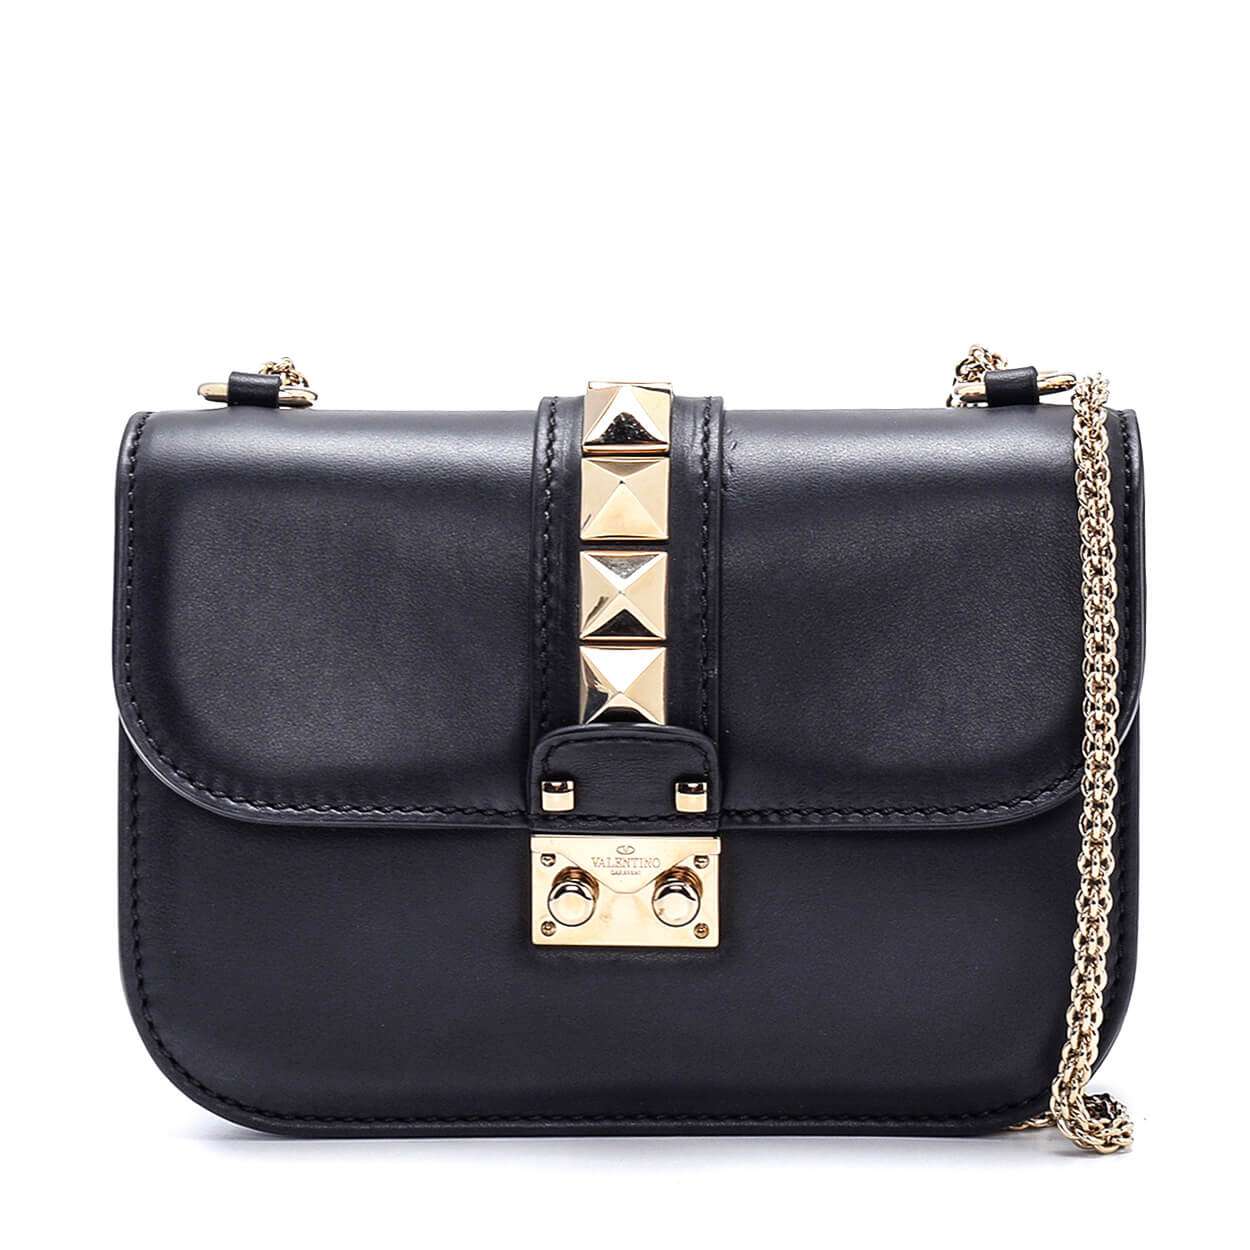 Valentino - Black Leather Small Rockstud Glamlock Flap Bag